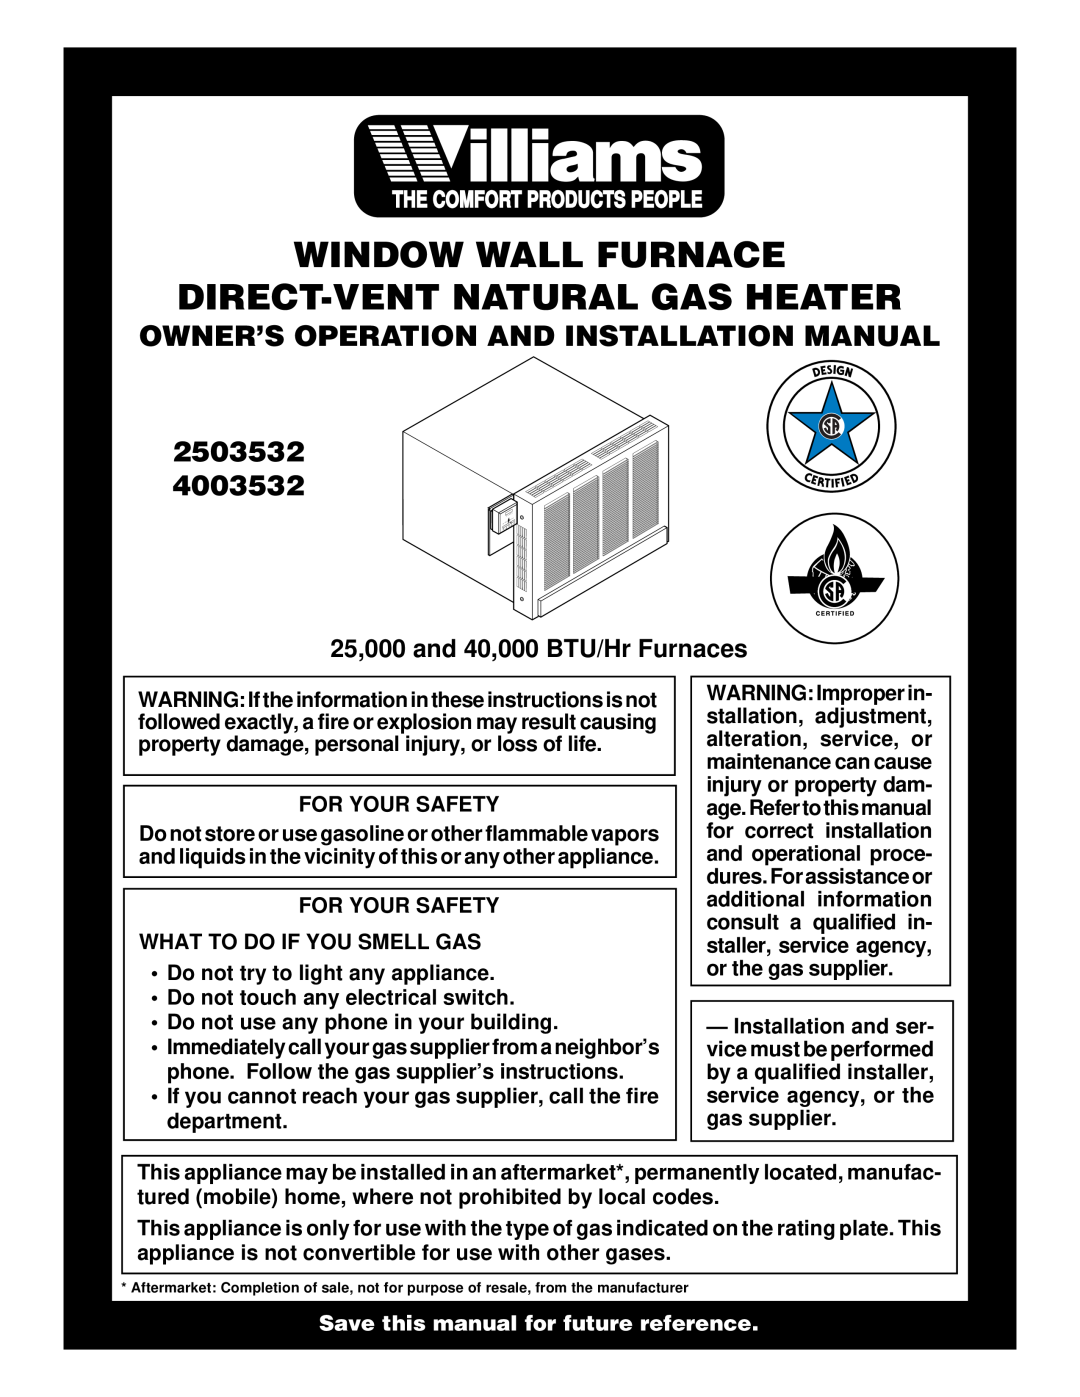 Williams 4003532 installation manual Window Wall Furnace Direct-Ventnatural Gas Heater, 25,000 and 40,000 BTU/Hr Furnaces 